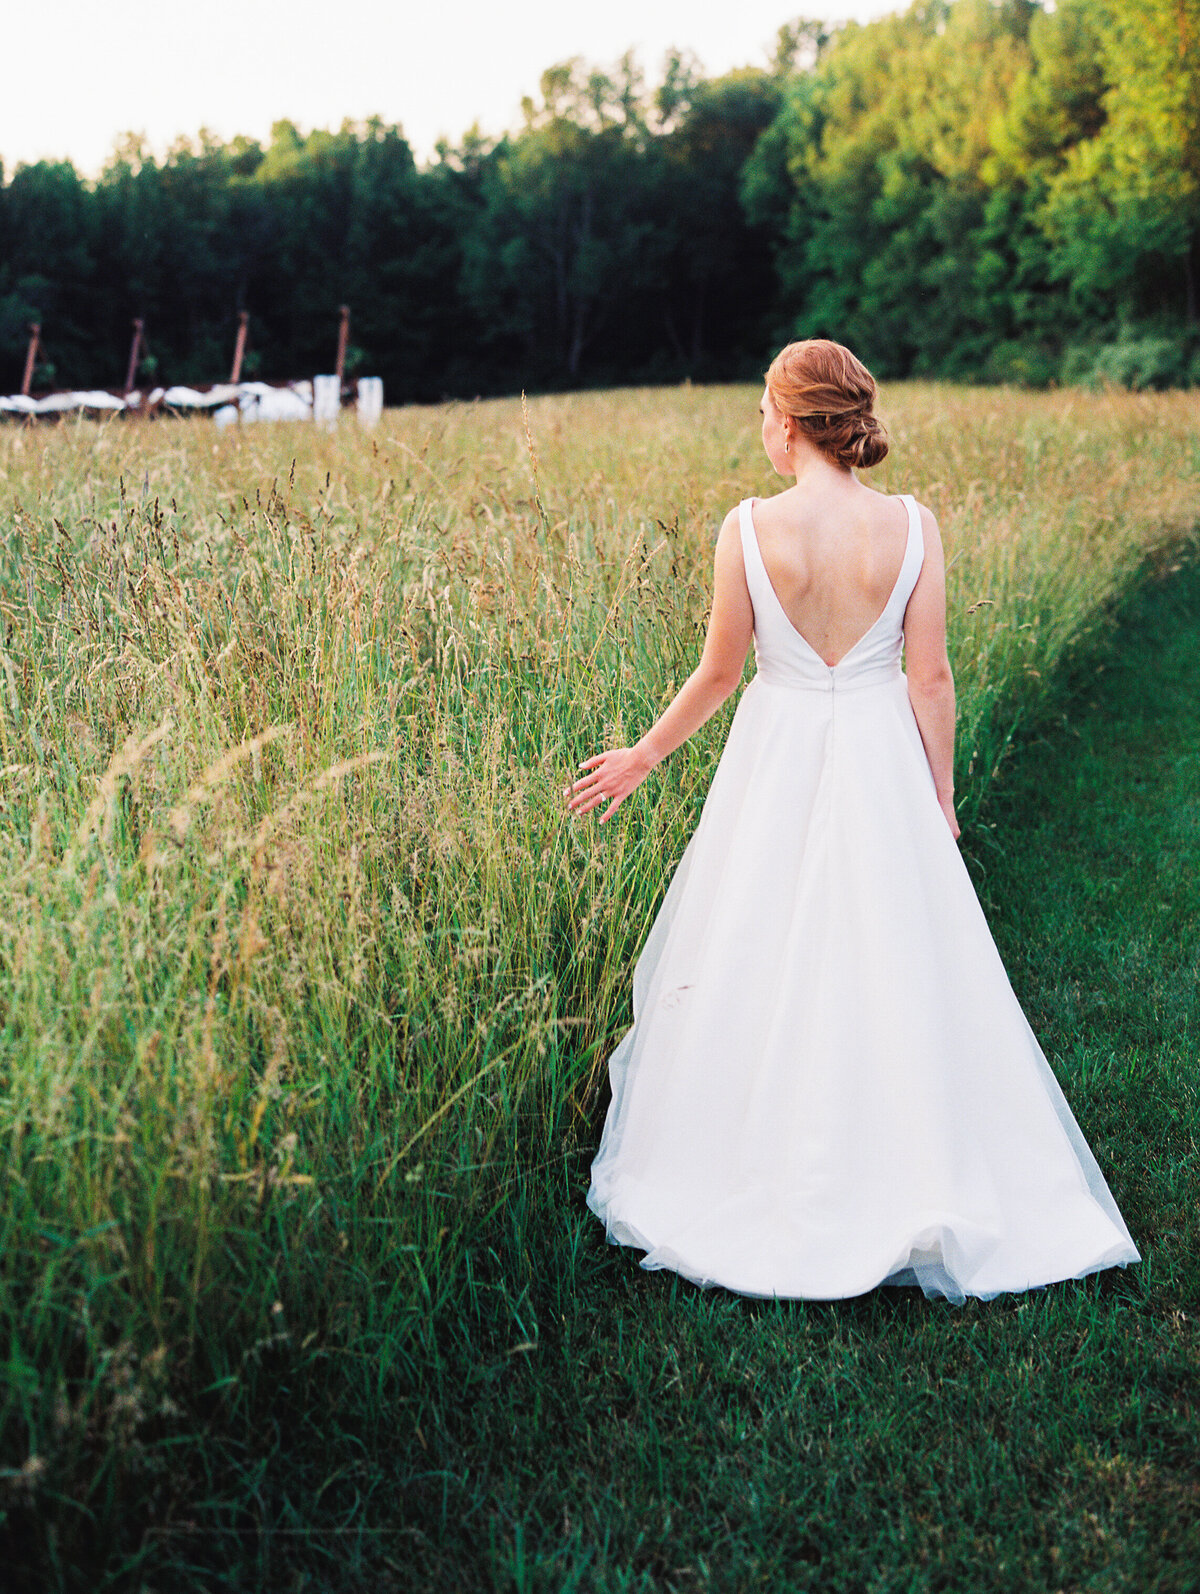 Bride walking through a grassy field